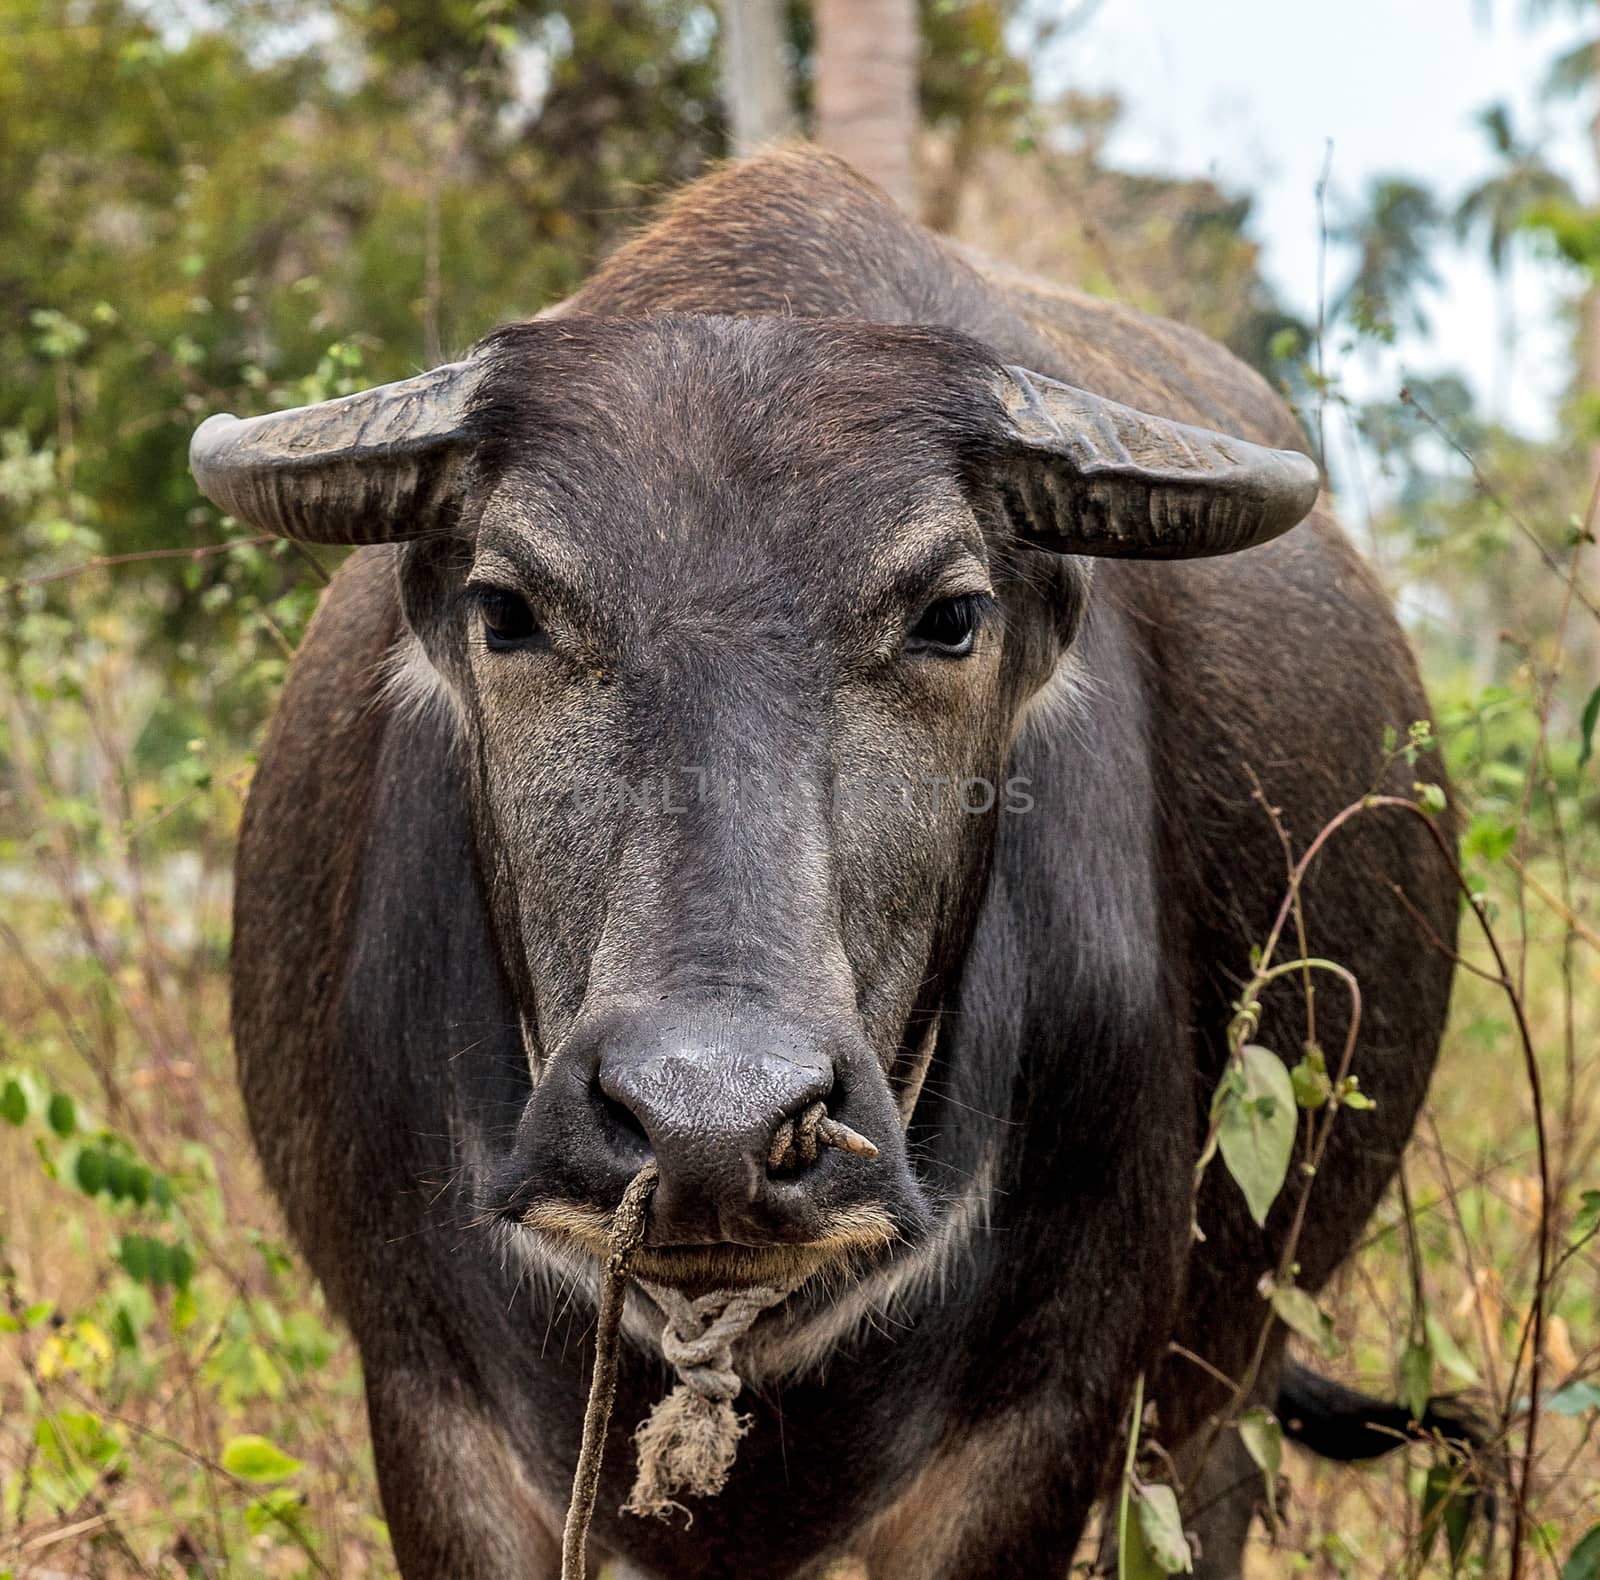 water buffalo or carabao (Bubalus bubalis, Bubalus arnee)